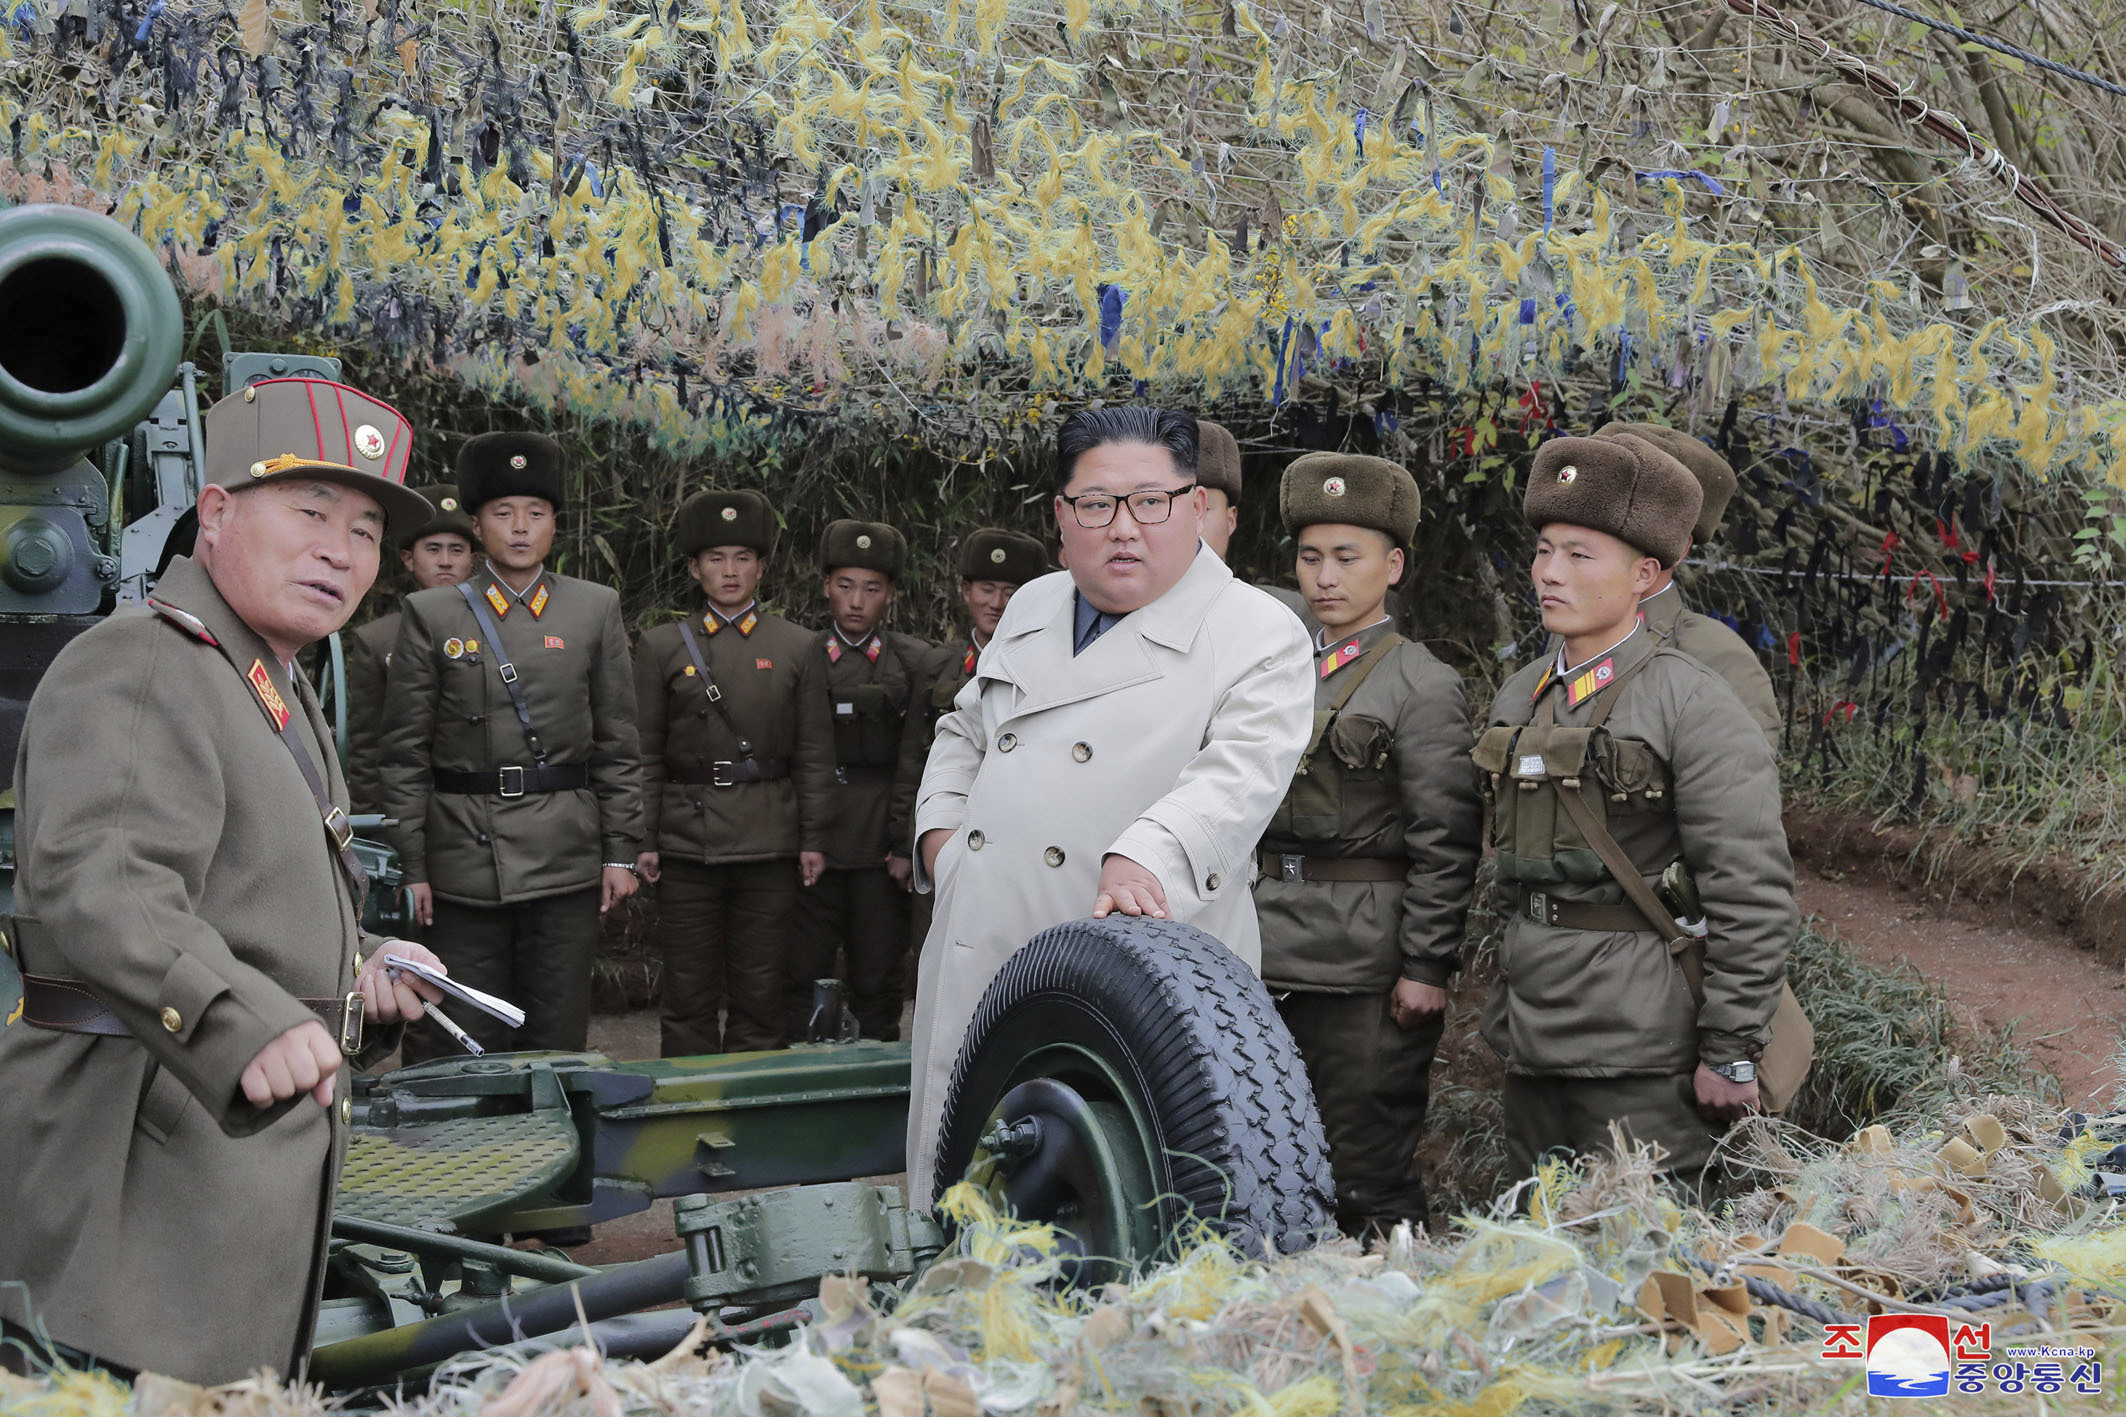 Kim Jong Un orders North Korea artillery firing, drawing Seoul rebuke